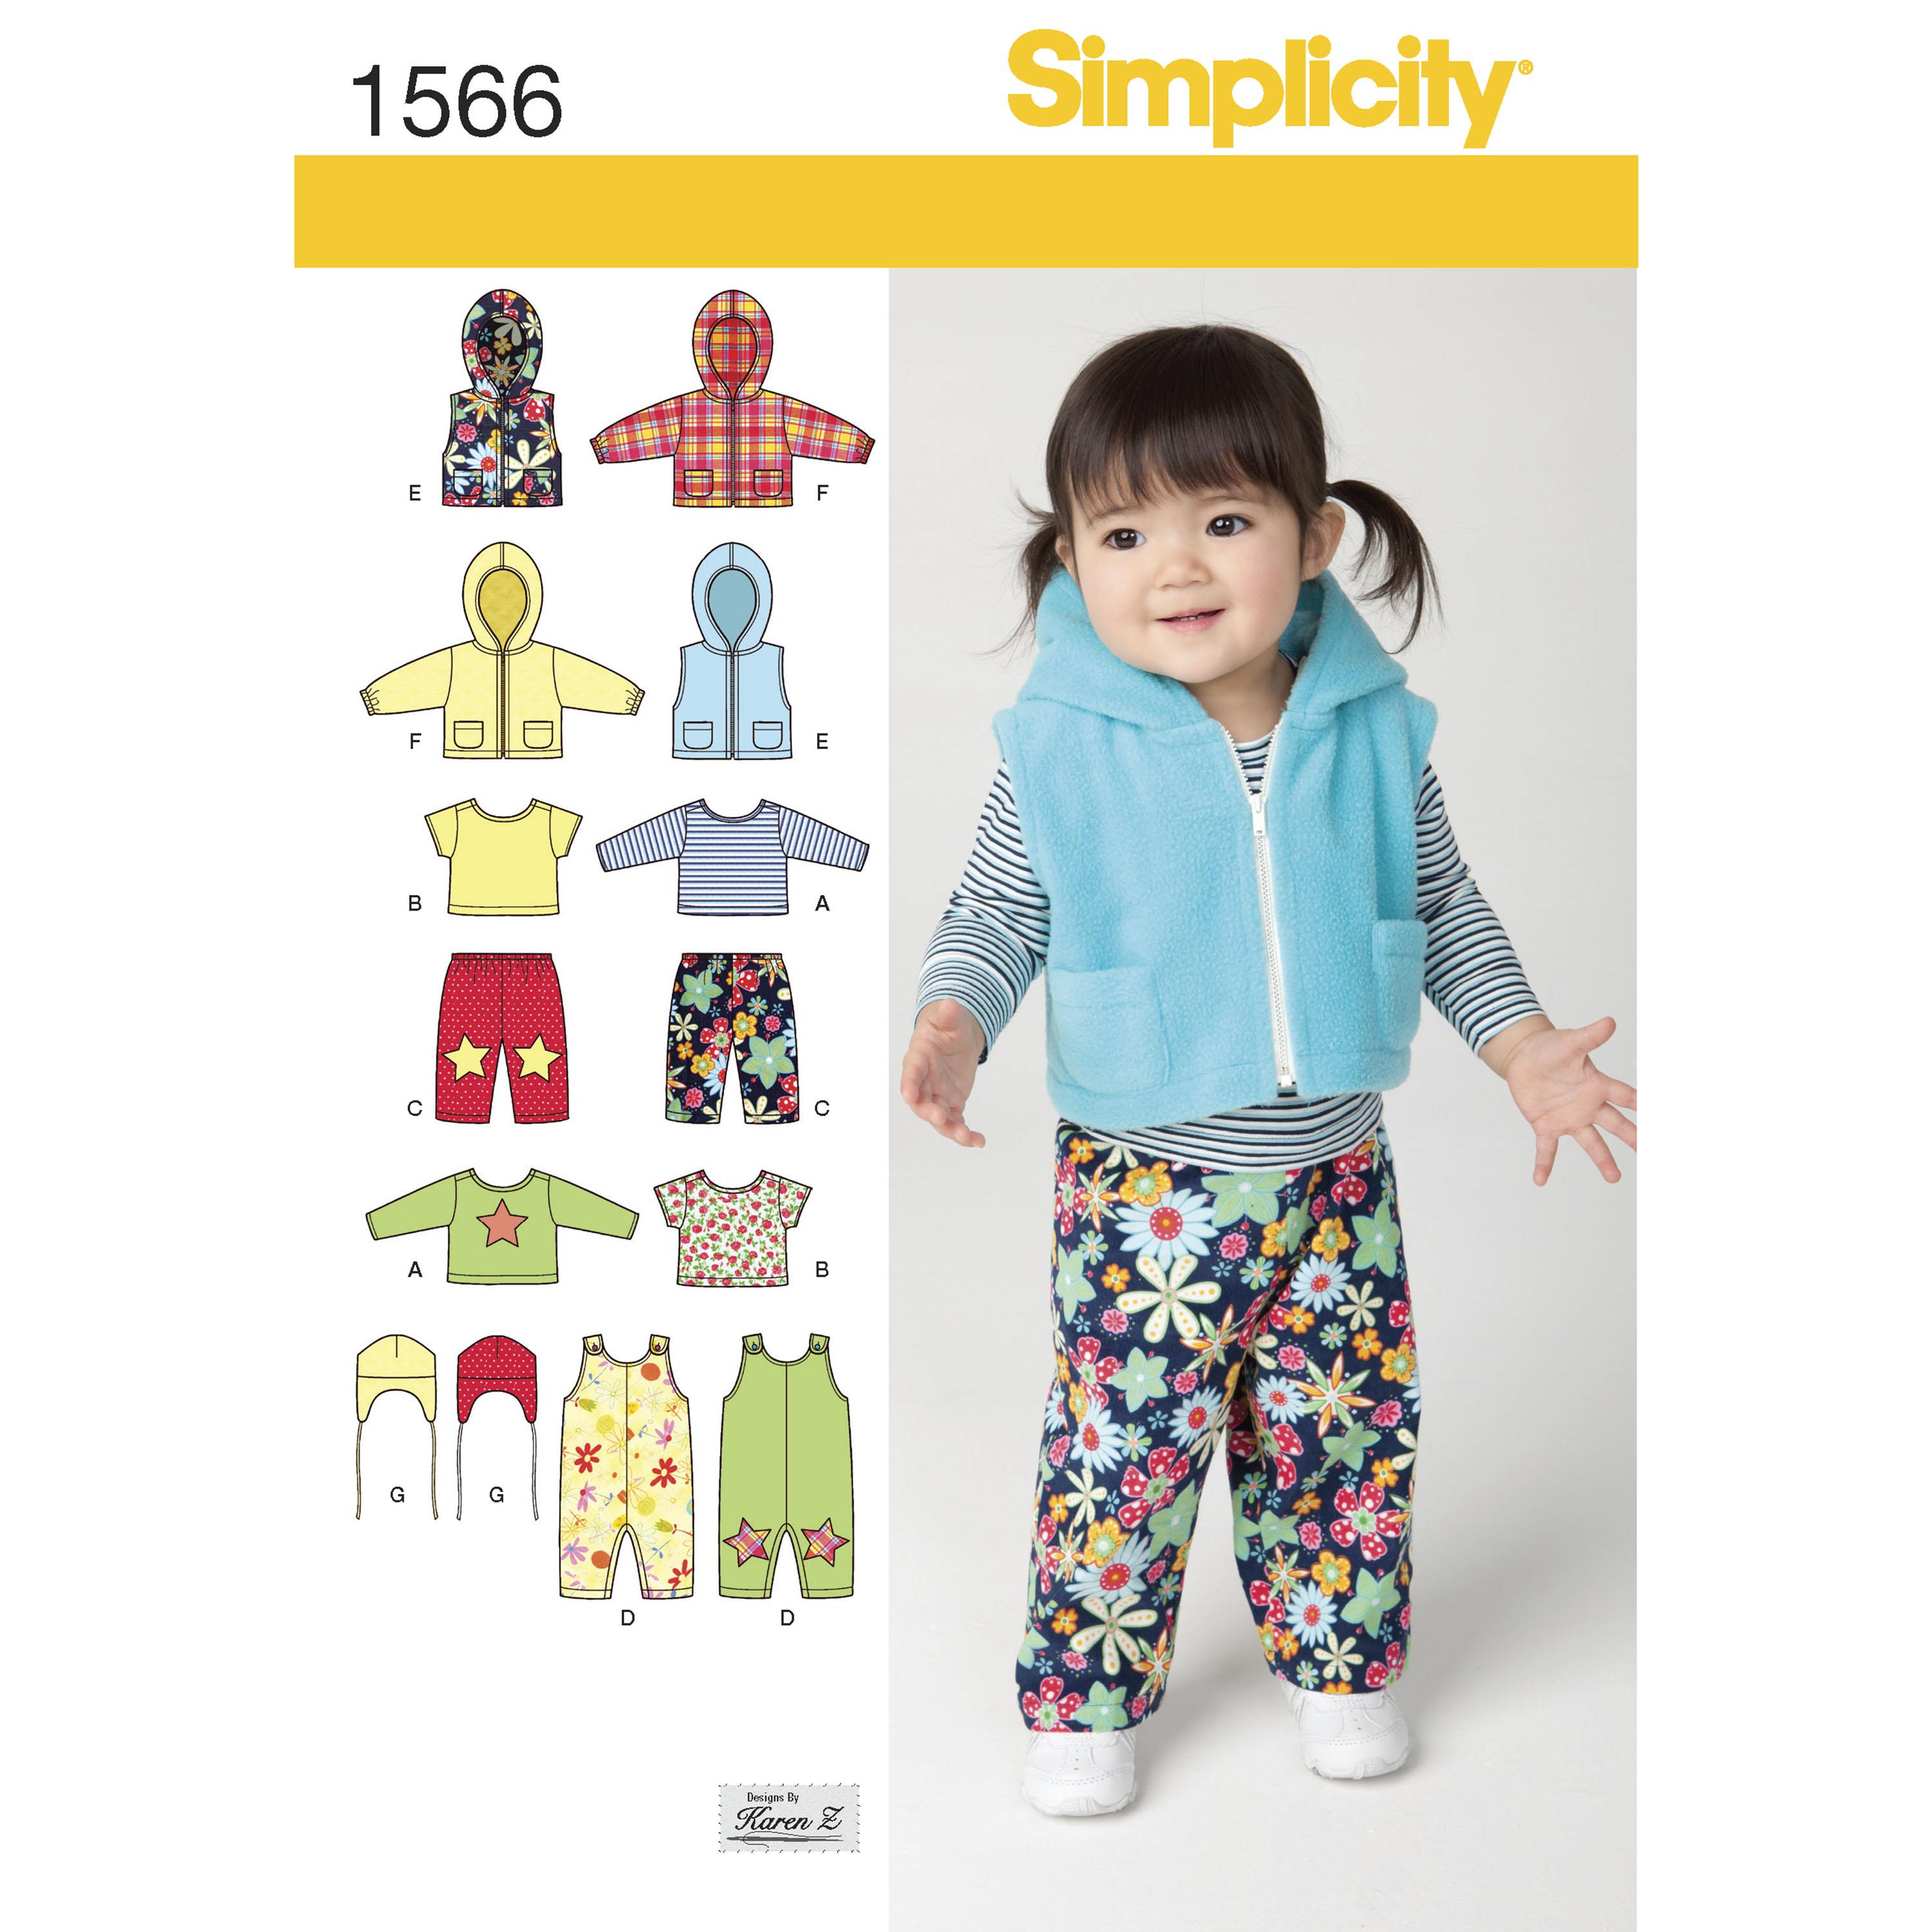 Simplicity S1566 Babies' Separates